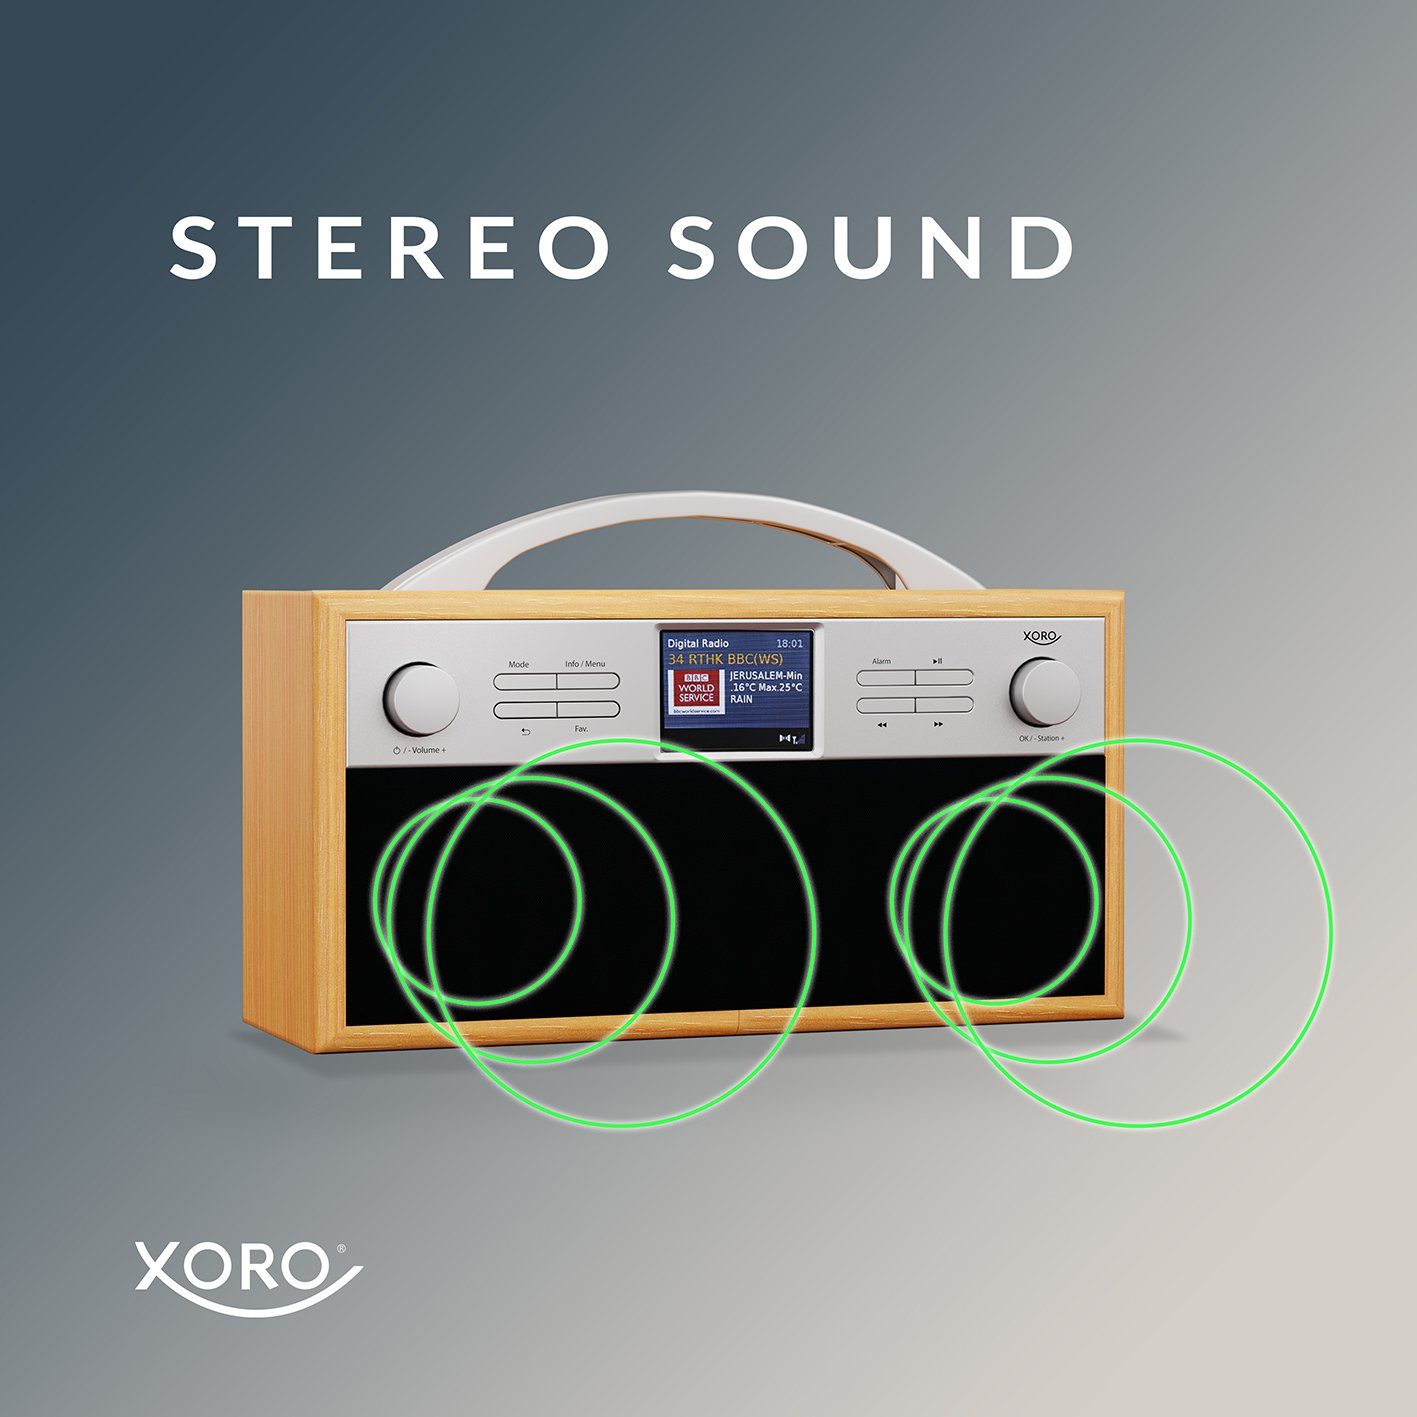 Xoro XORO FM DAB DAB+ Spotify Connect 250 WLAN-Stereo-Internetradio Internet-Radio IR und